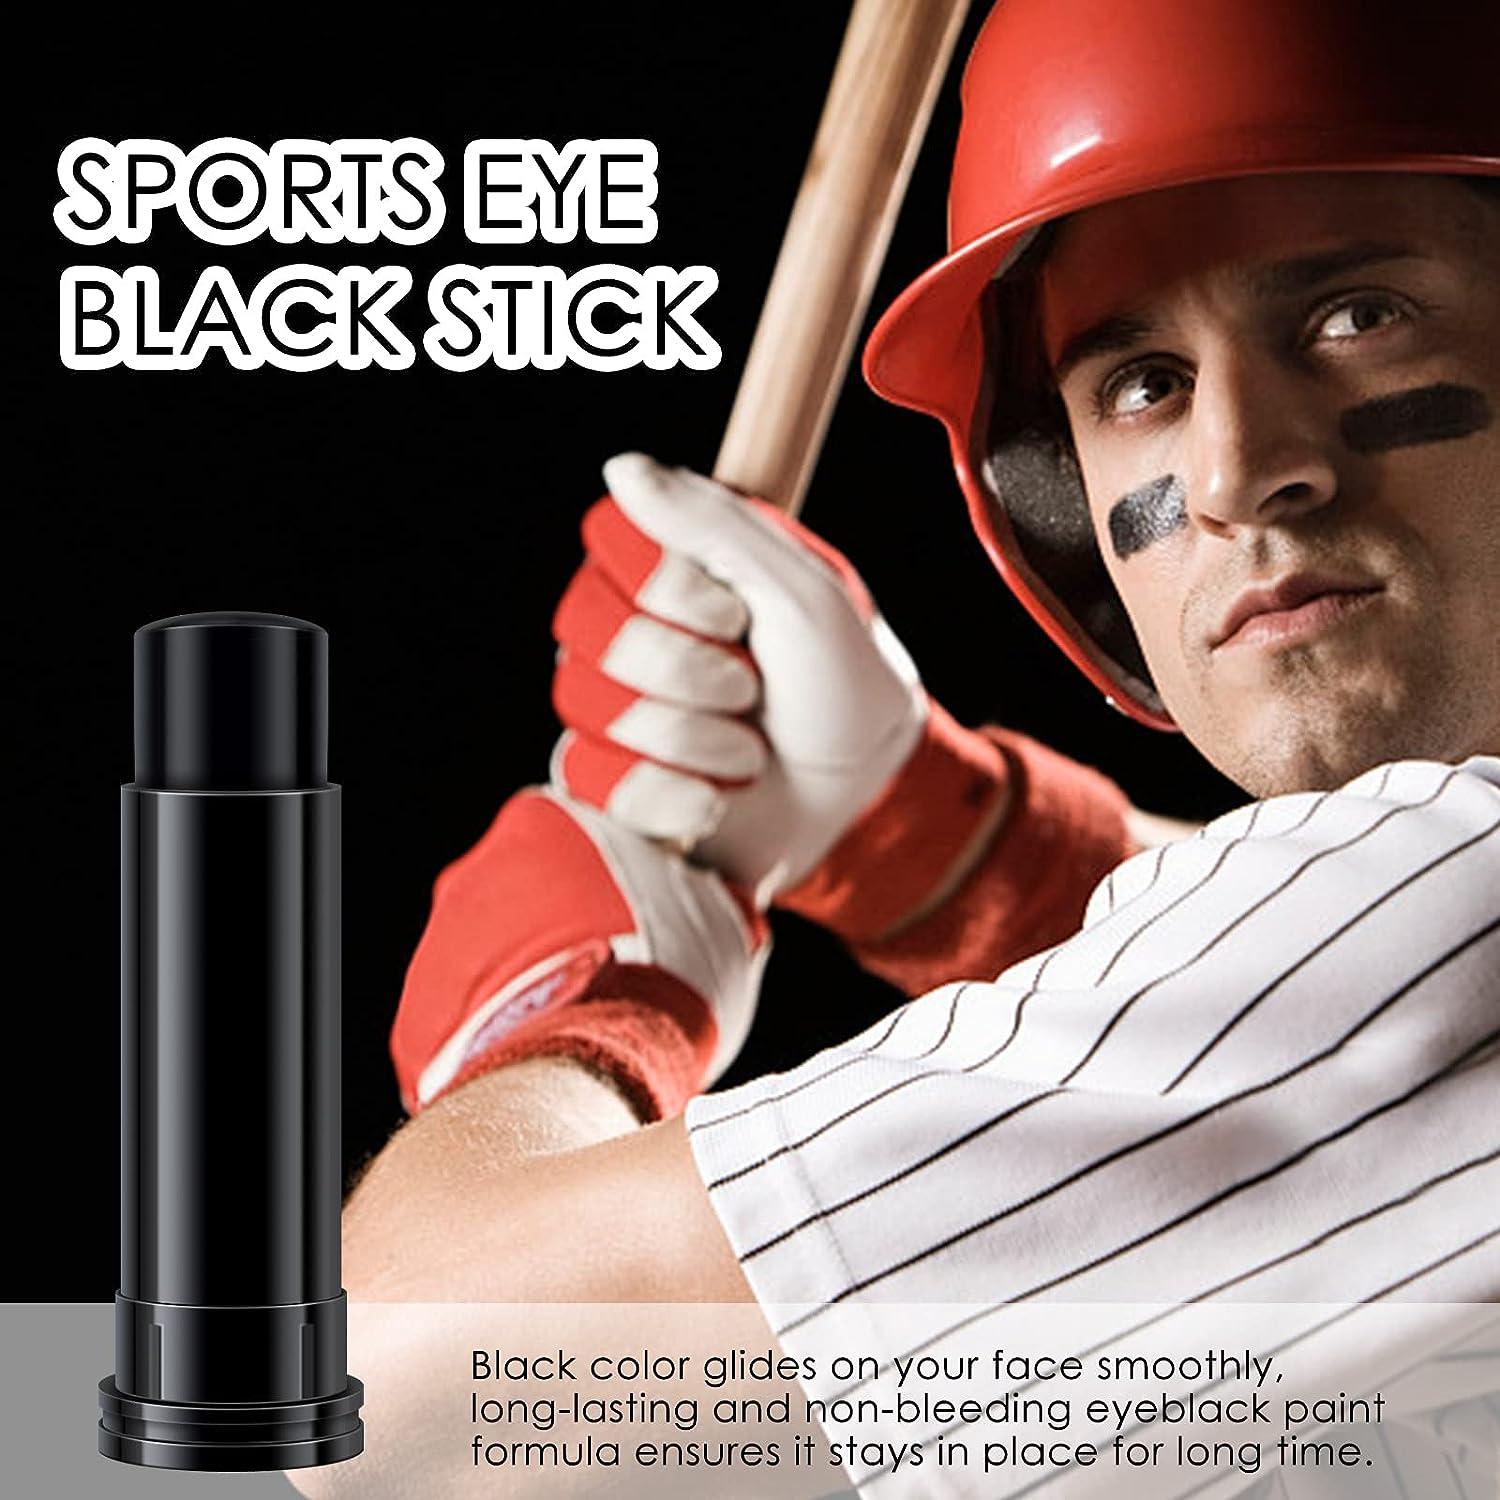 Eye Black Stick Softball Black Football Sports Eyeblack Stick Eye